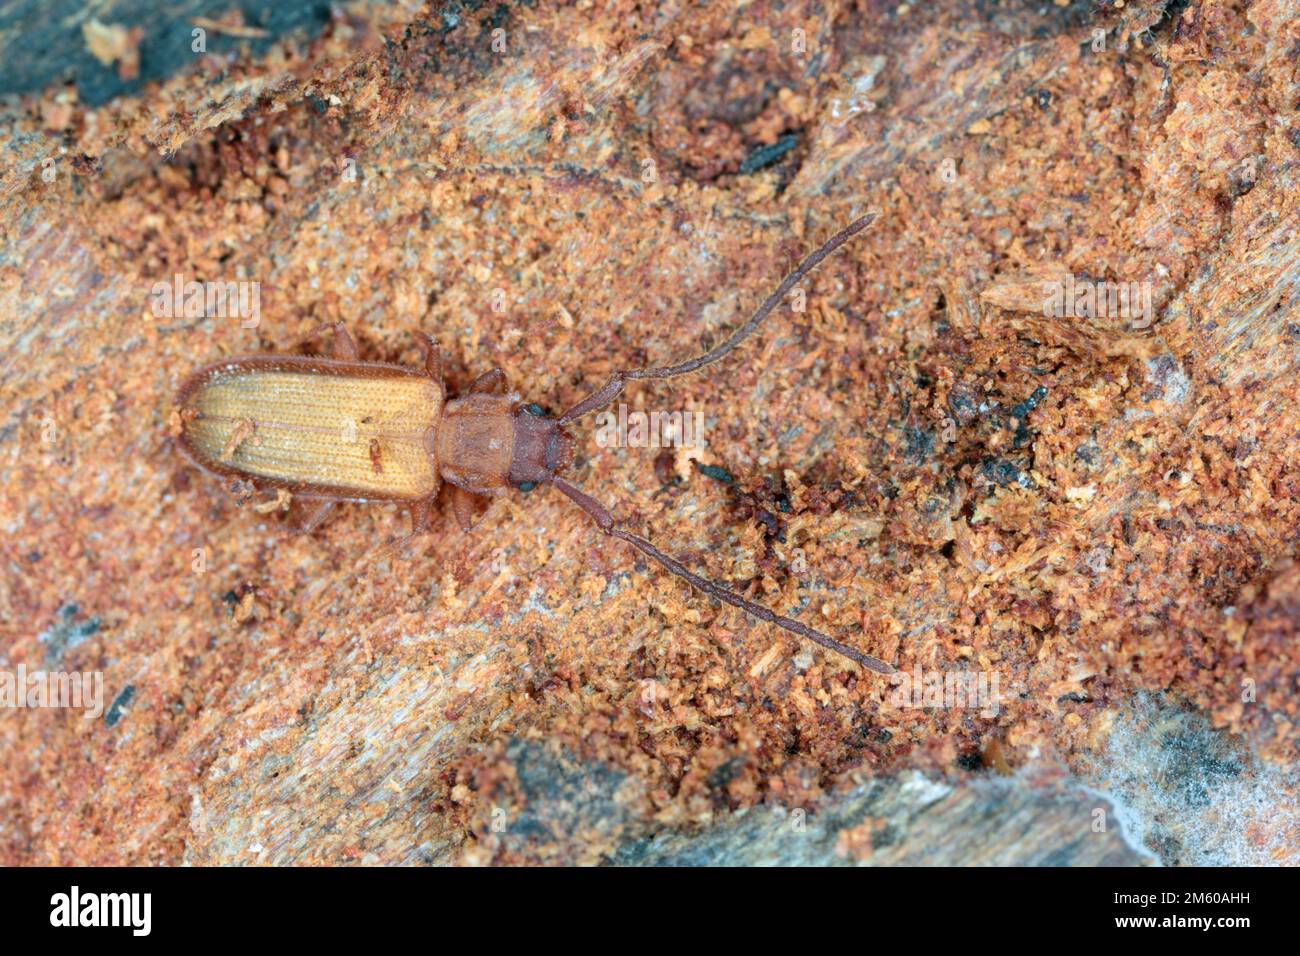 Closeup on silvanid flat bark beetle, Uleiota planata, hiding under a fallen log in the forest. Stock Photo